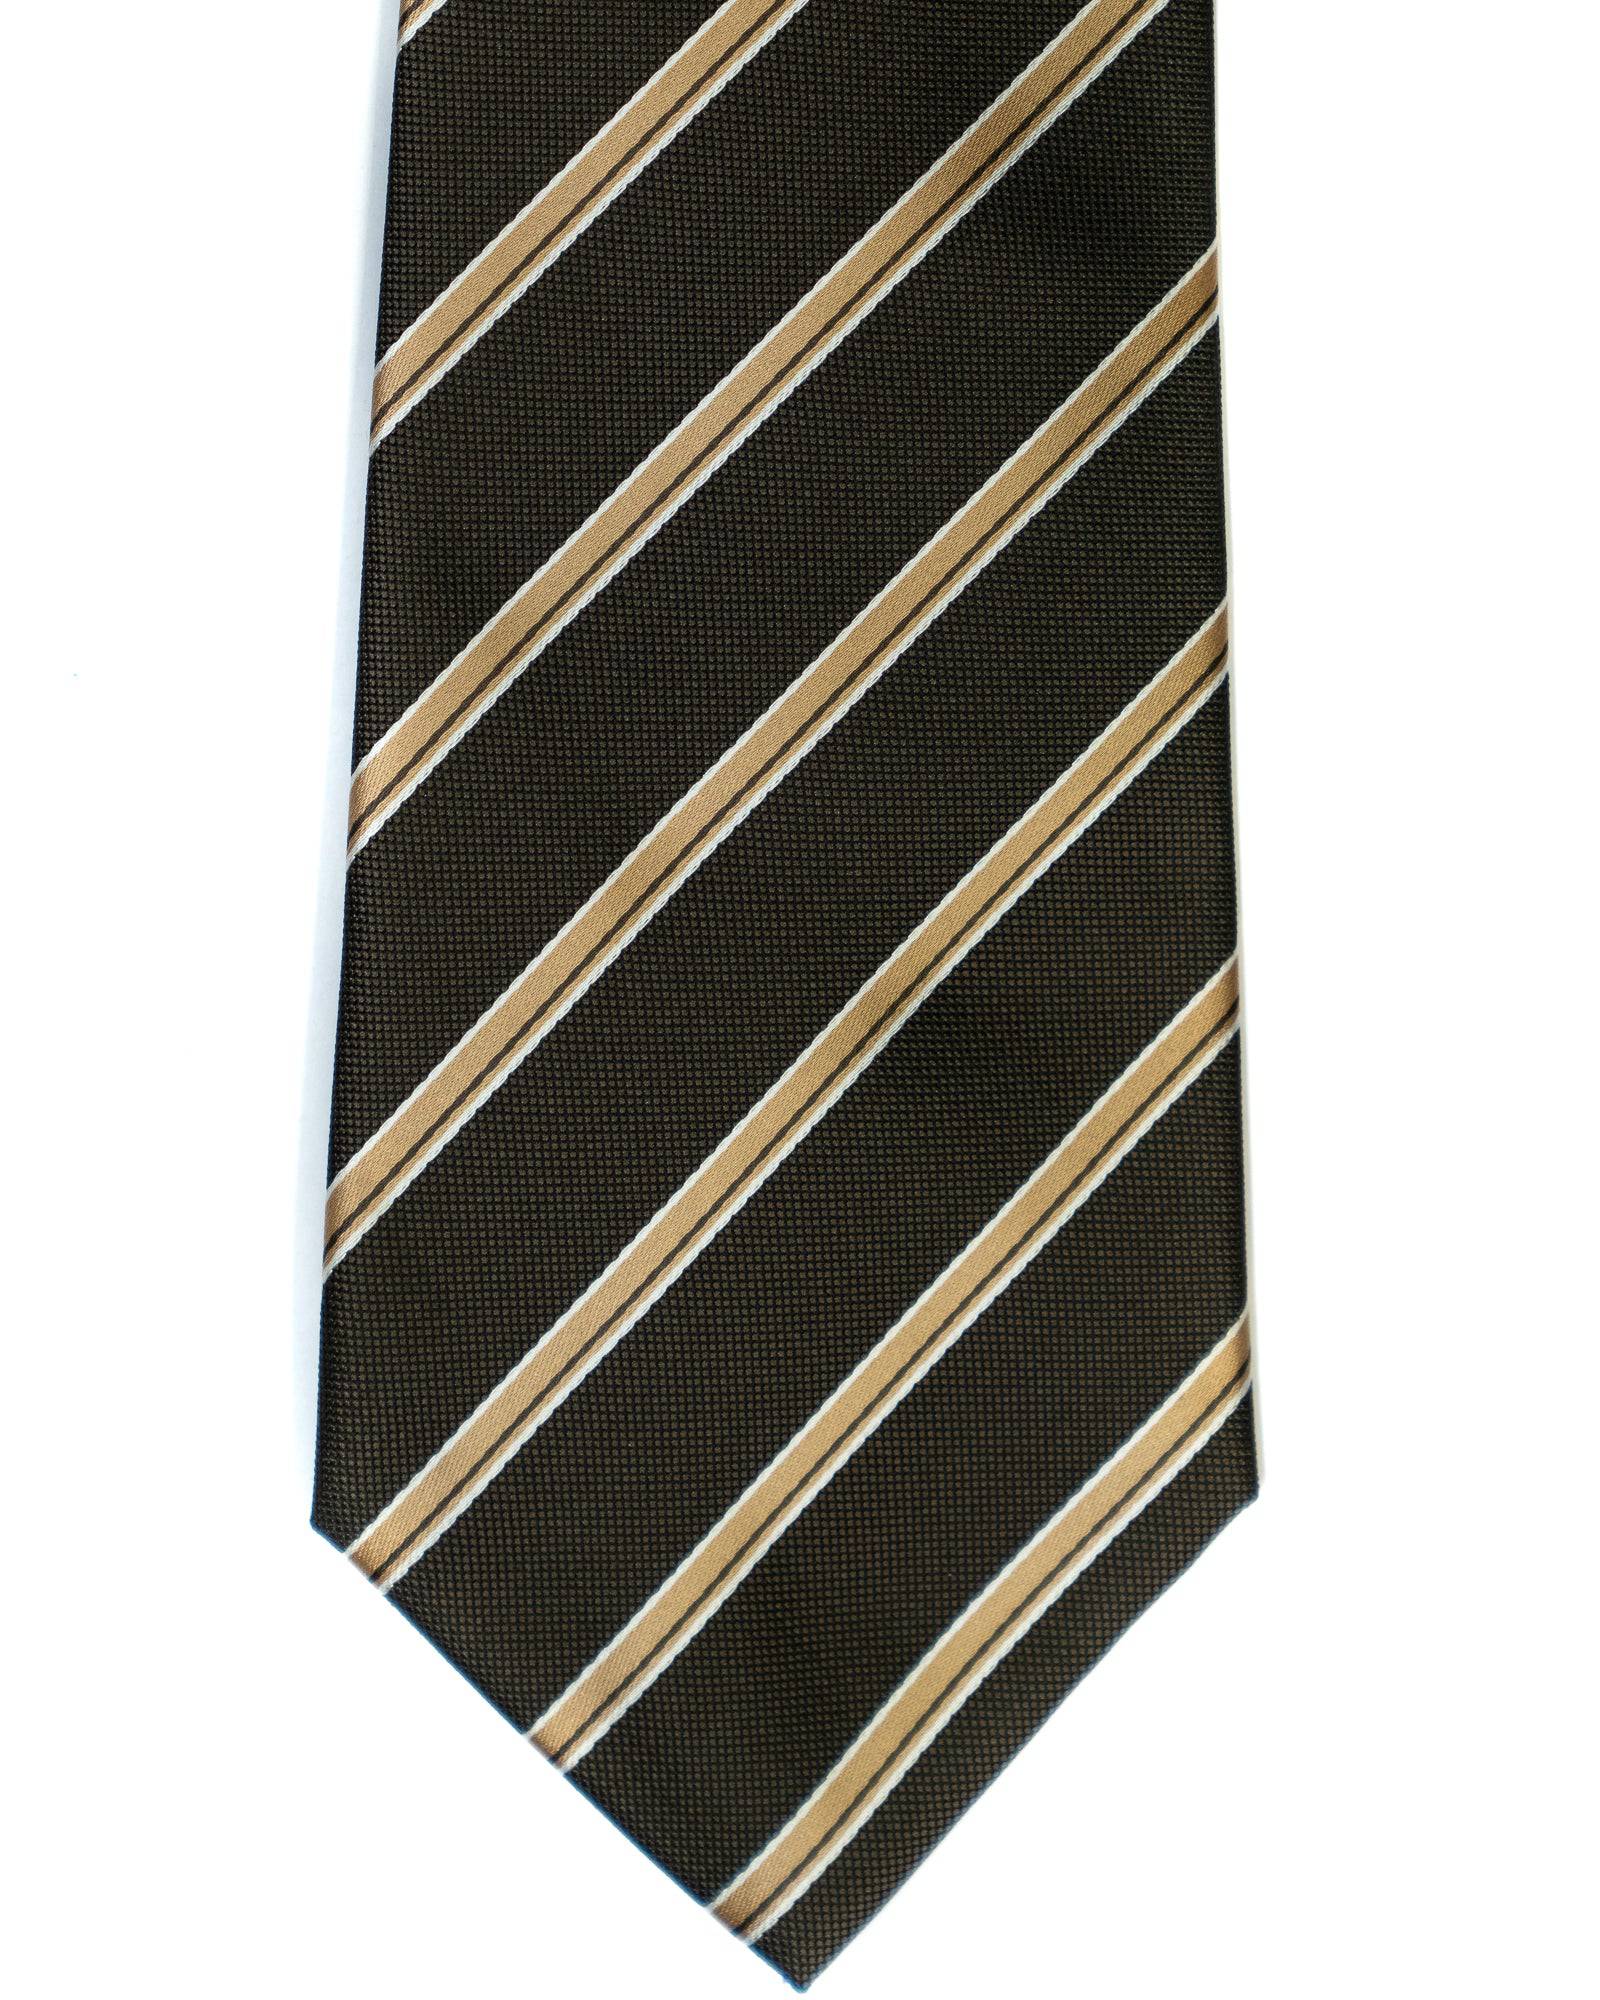 Gianfranco Stripe Tie in Brown with Khaki - Rainwater's Men's Clothing and Tuxedo Rental